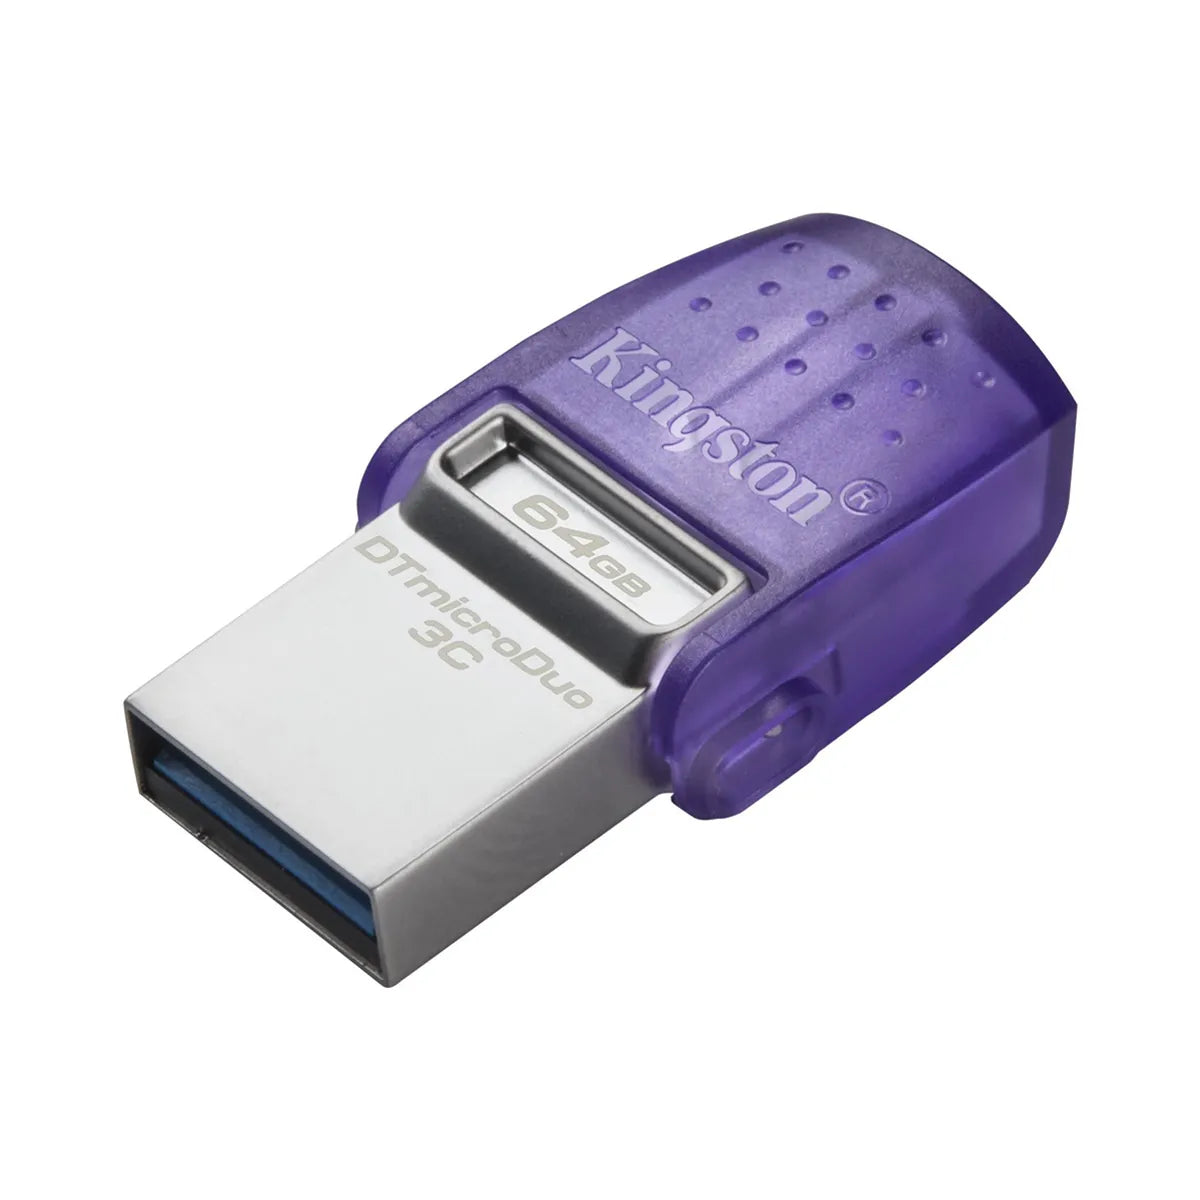 FLASH MEMORY KINGSTON 64GB Data Traveler micro-Duo3CG3 Type-A - C Purple